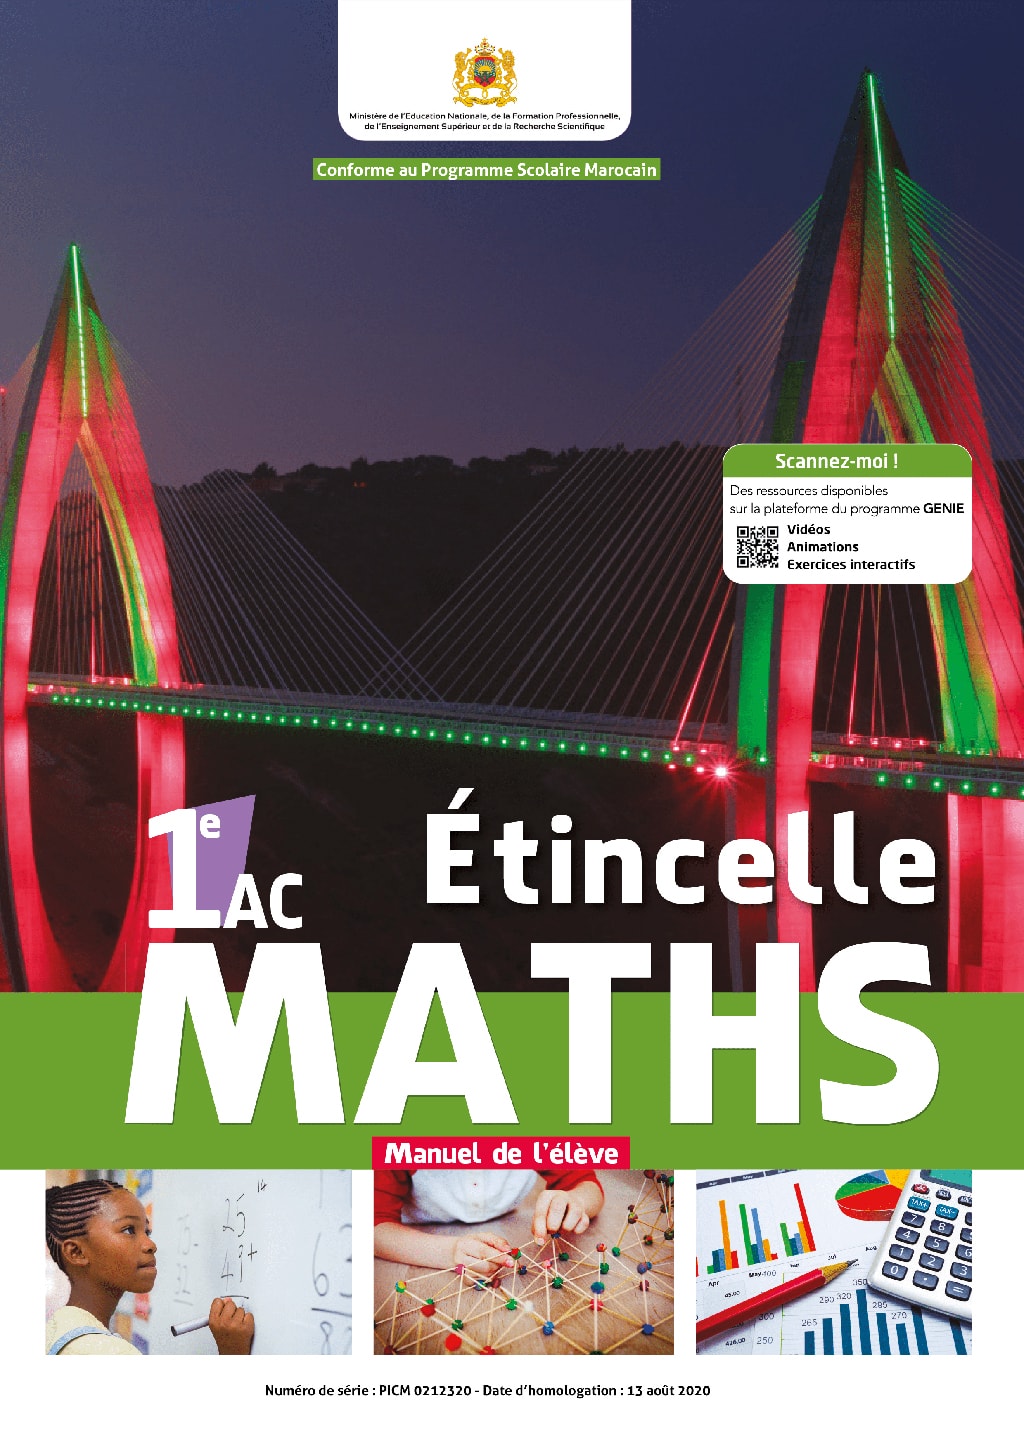 Etincelle Maths 1AC